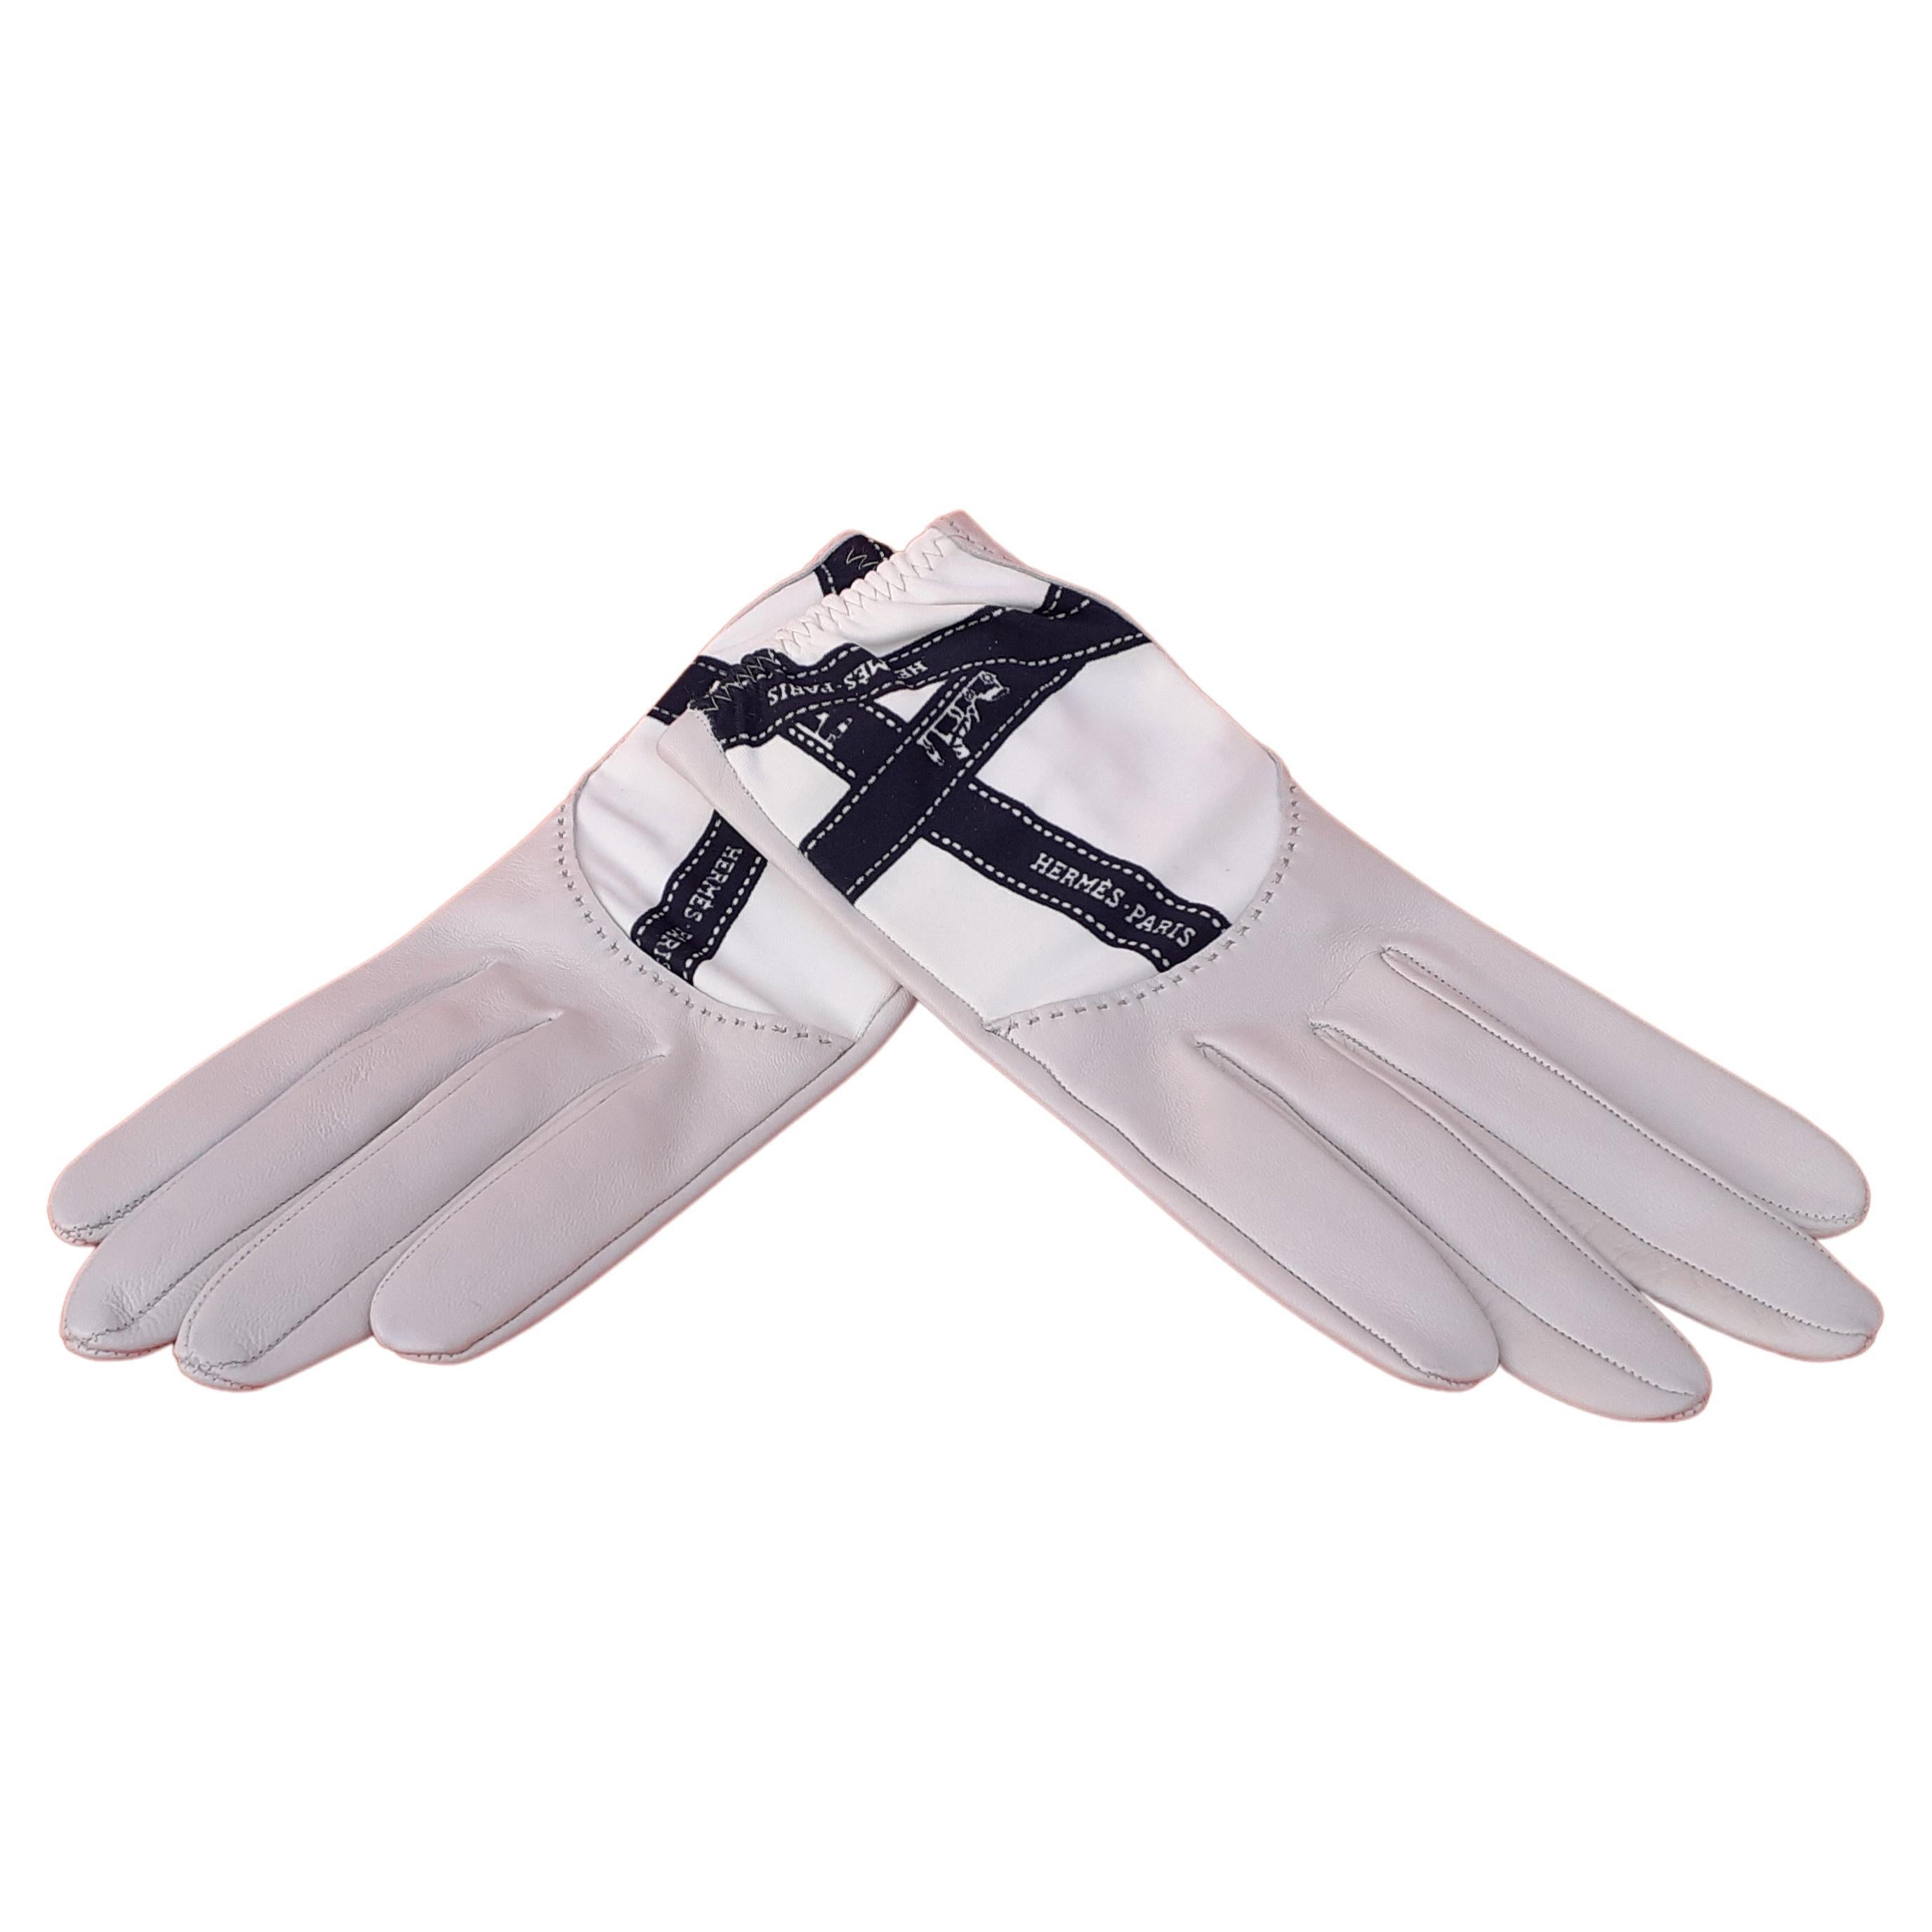 Hermès Lamskin Leather Gloves Ribbon Printed White and Black Size 7